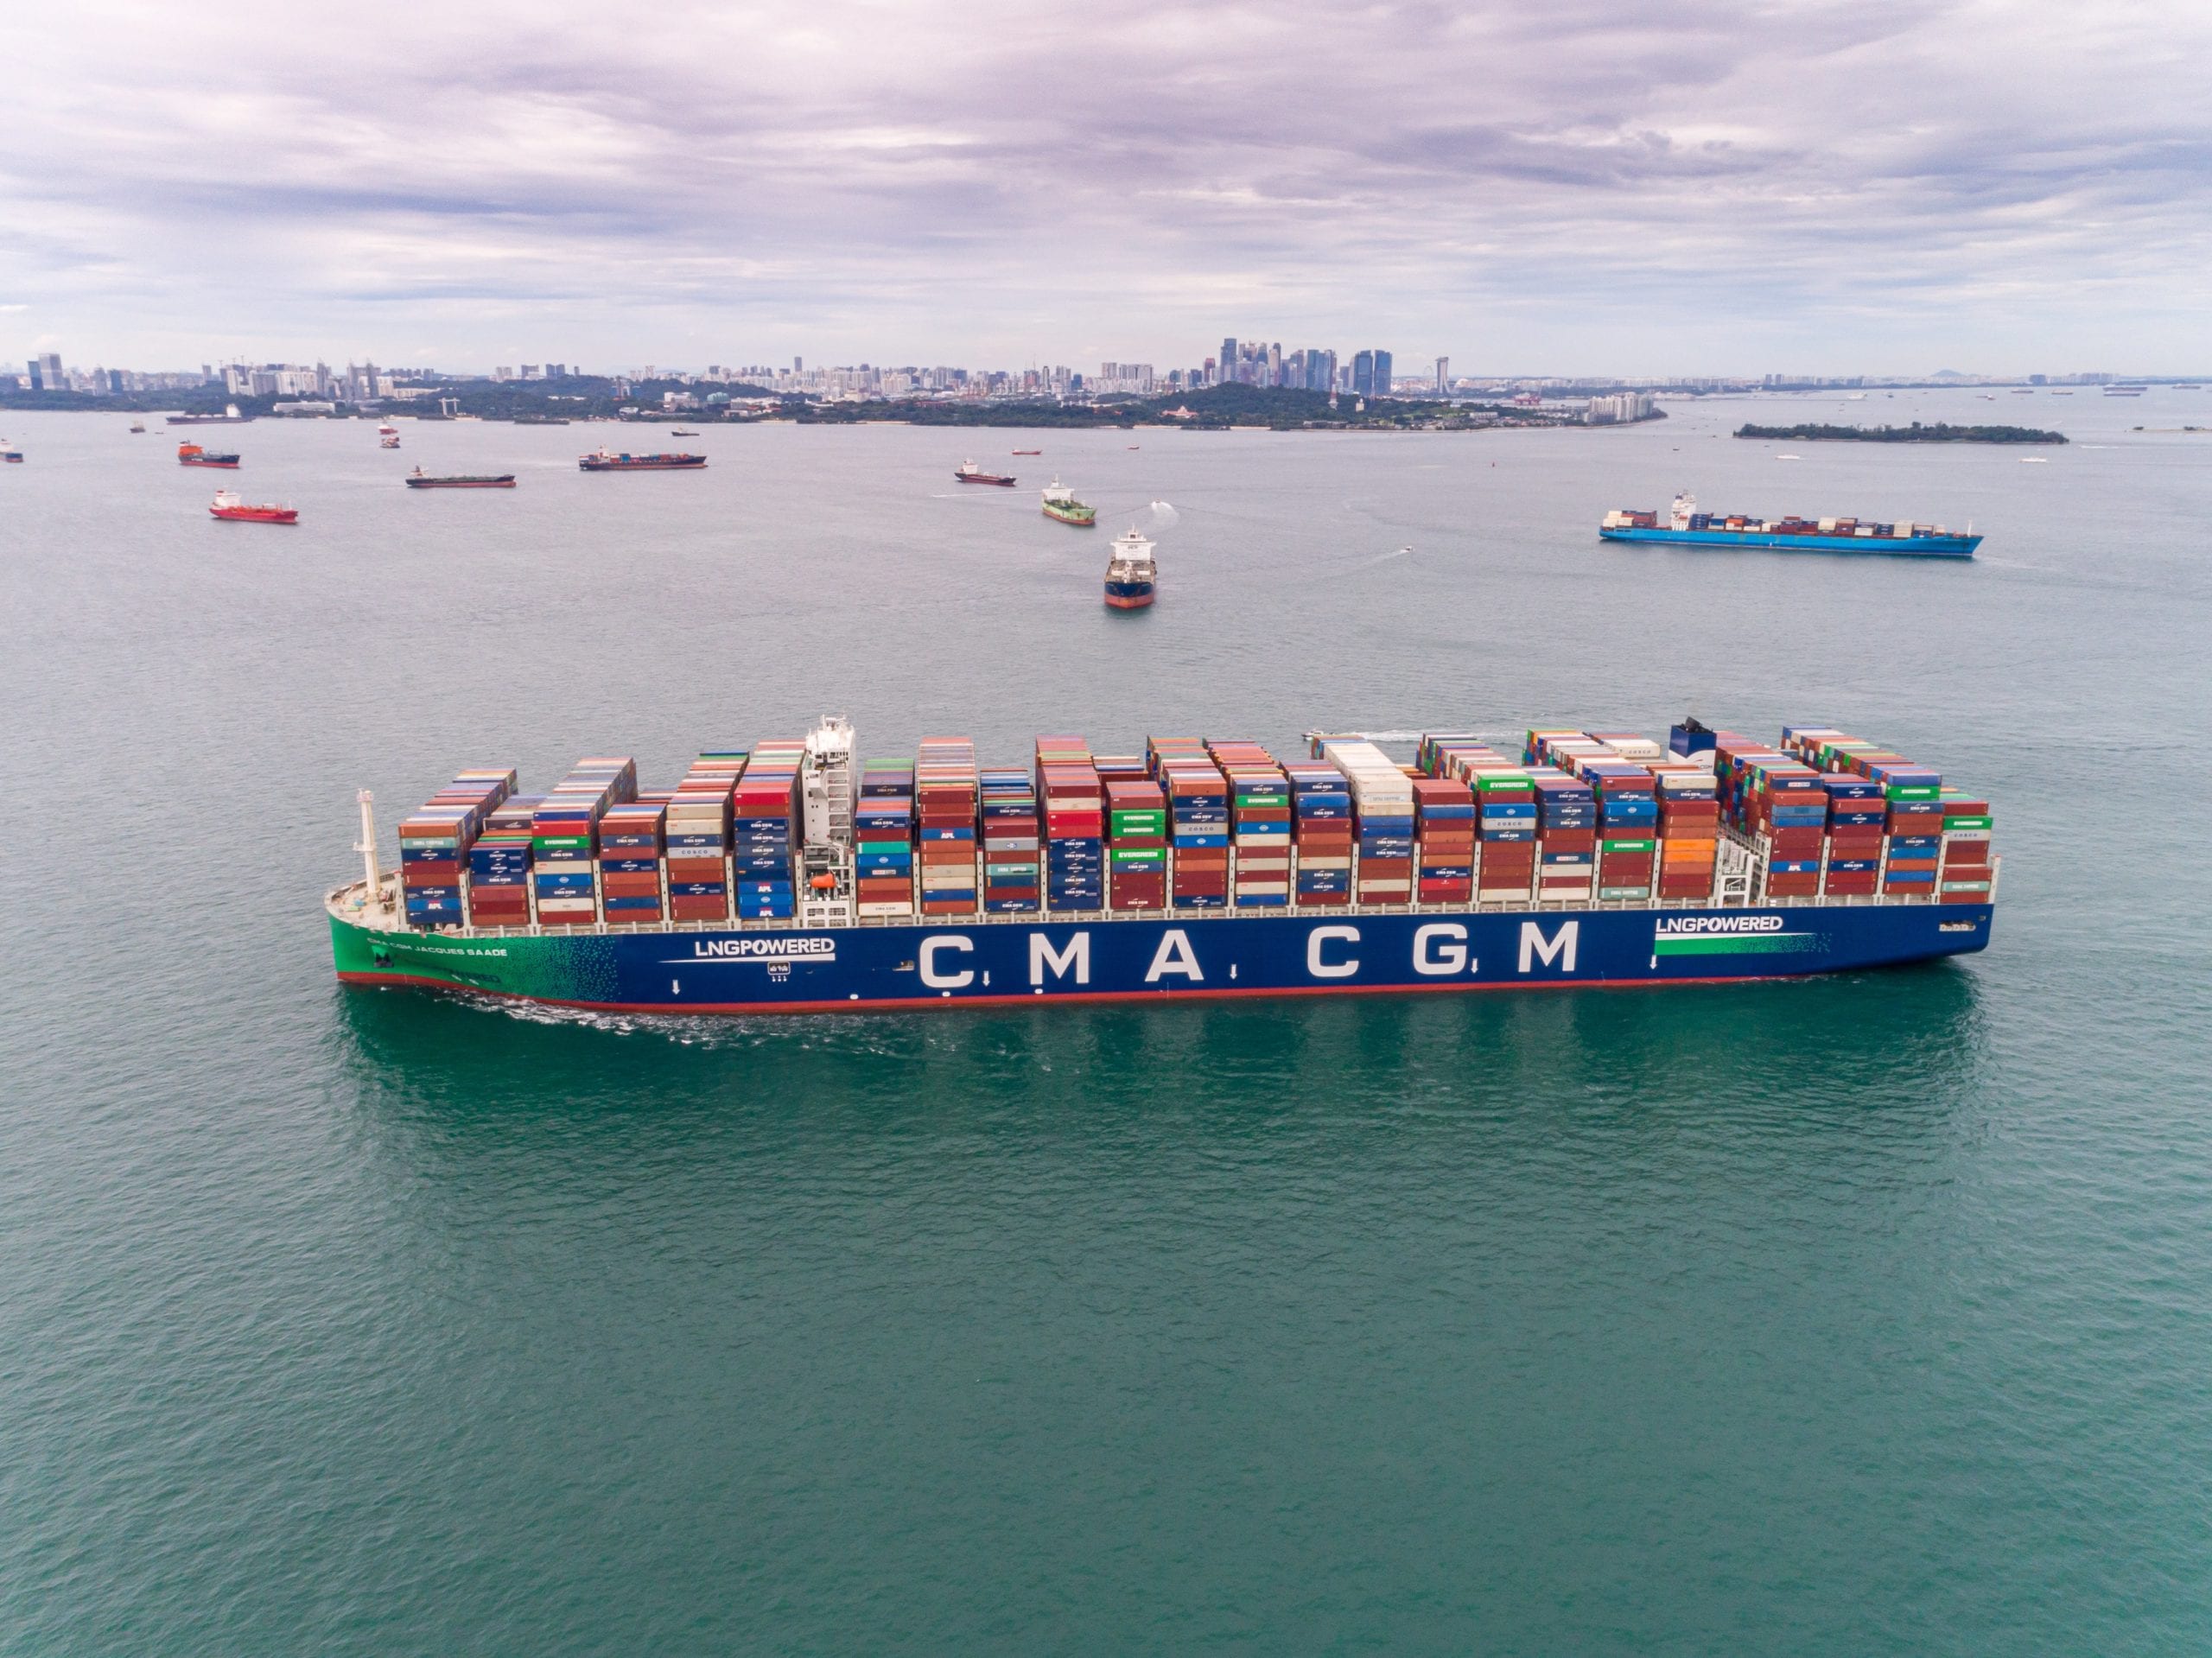 CMA CGM’s New LNG-Powered Megaship Sets Cargo Record